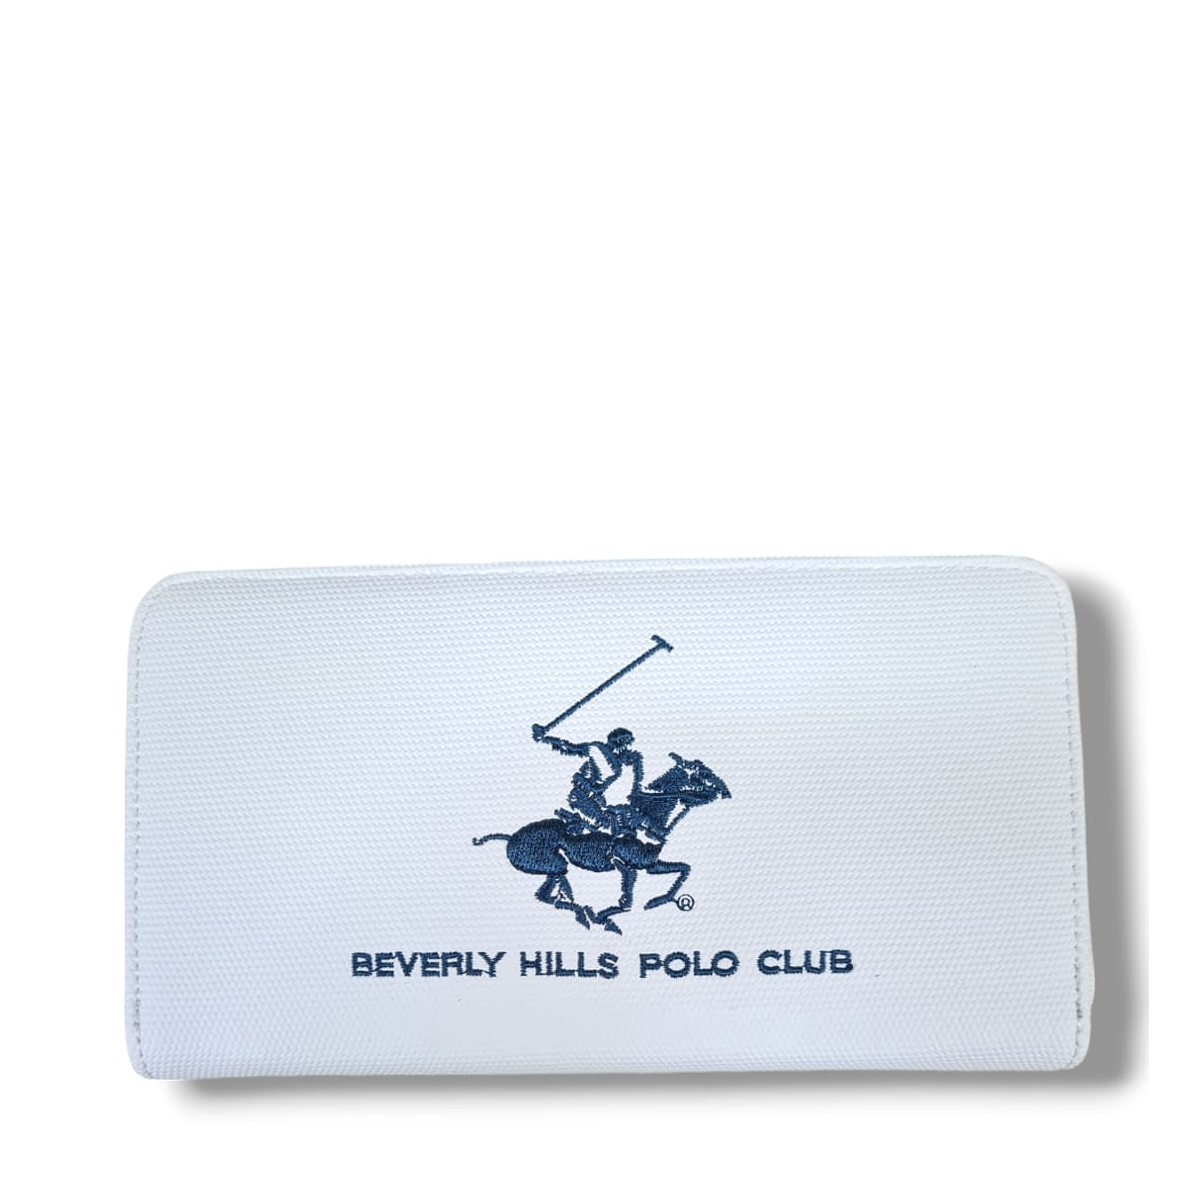 BEVERLY HILLS POLO CLUB PORTAFOGLIO DONNA SIMILPELLE BH-3624-AM